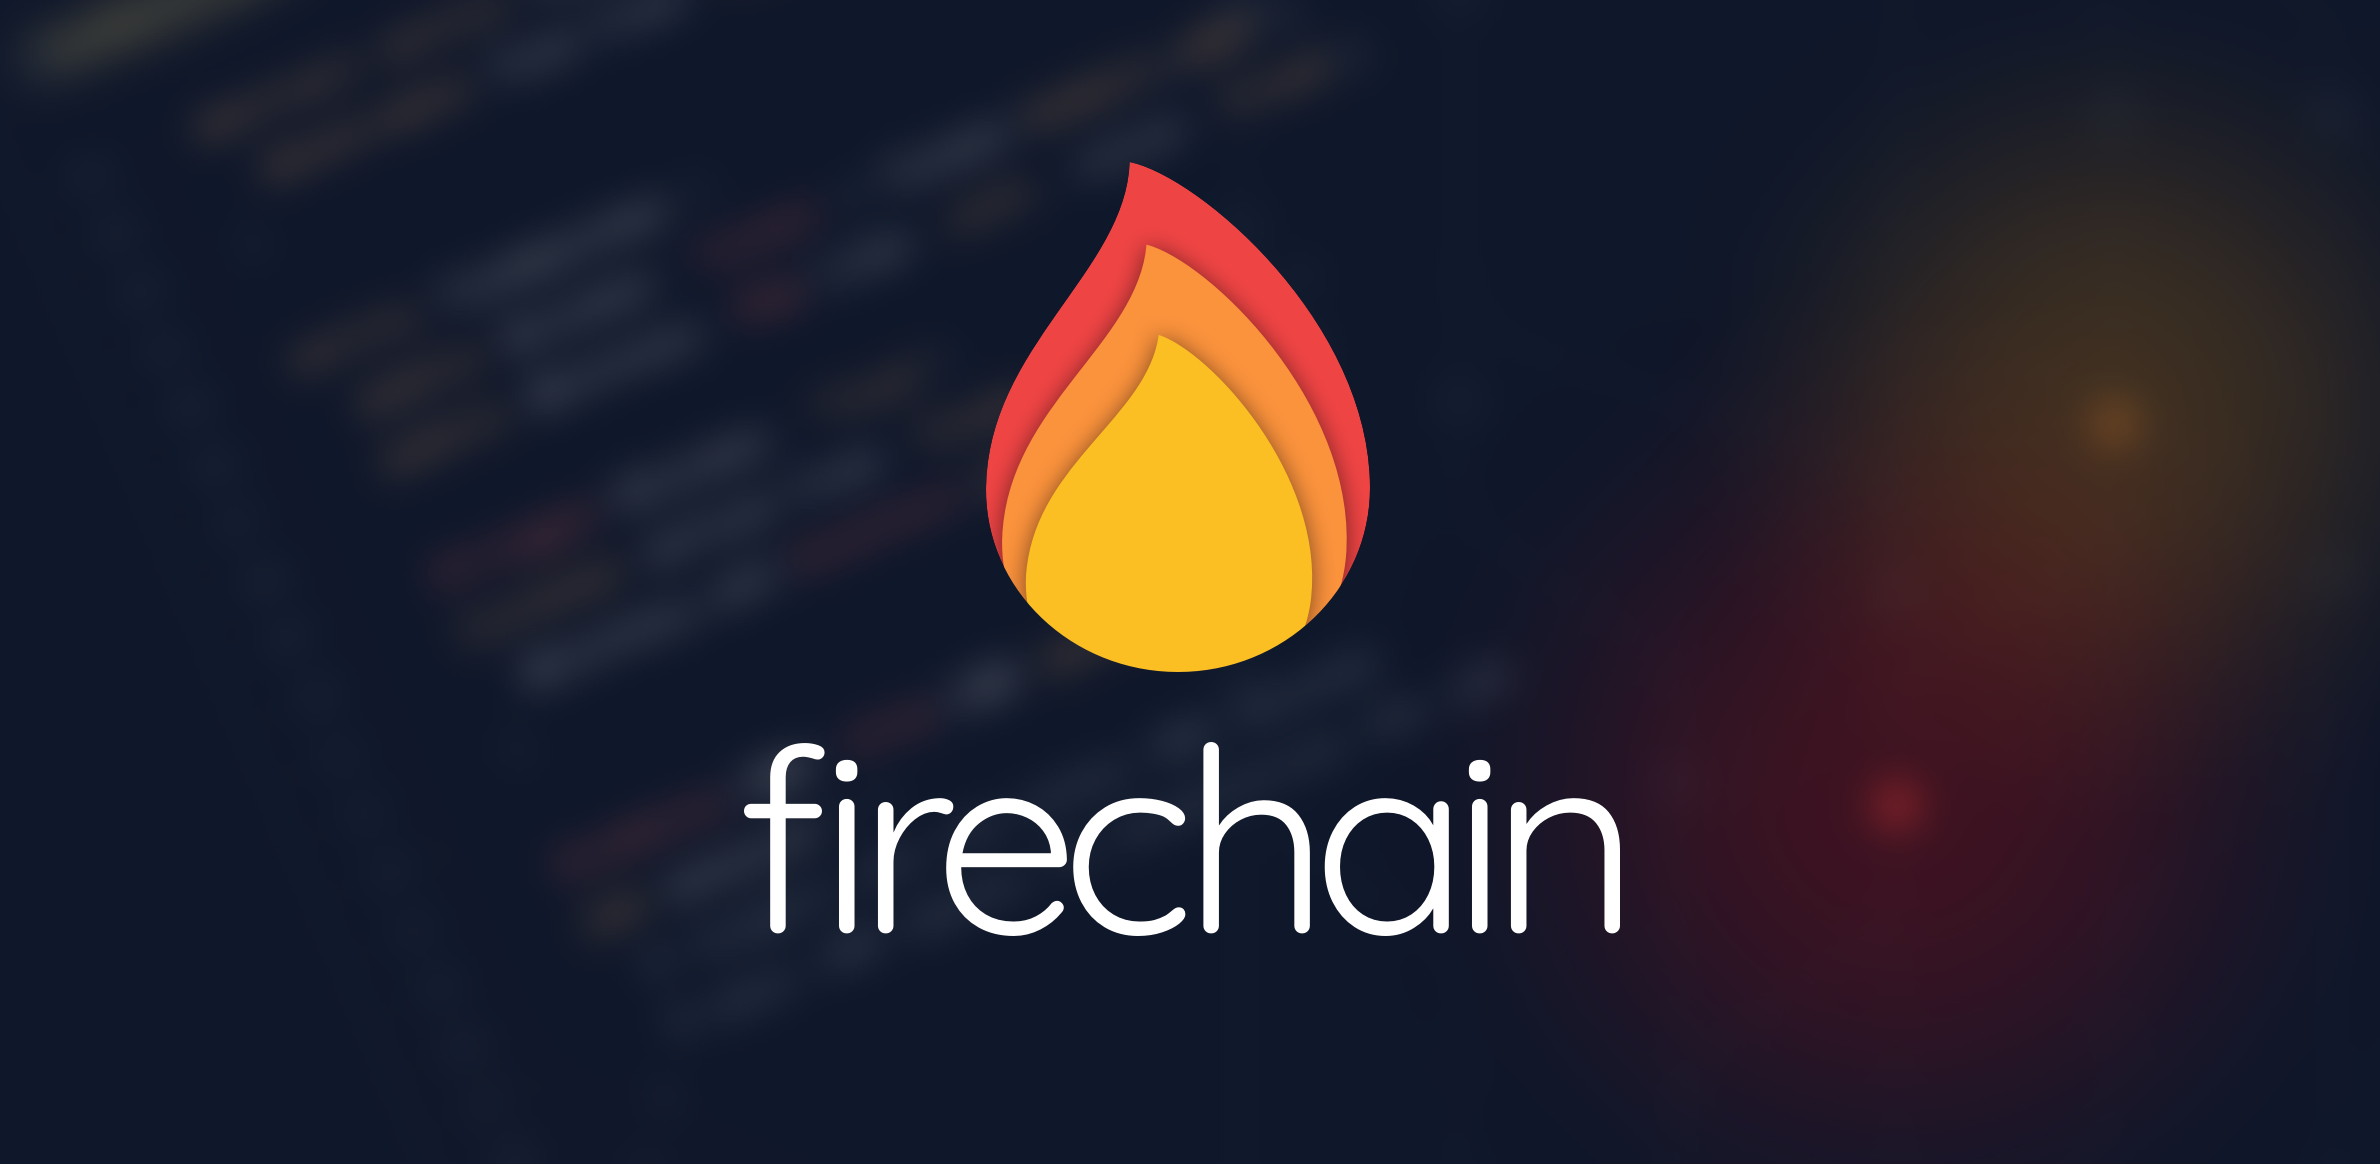 Firechain Raises $3 Million in Pre-Seed Funding to Launch its Innovative Blockchain Platform